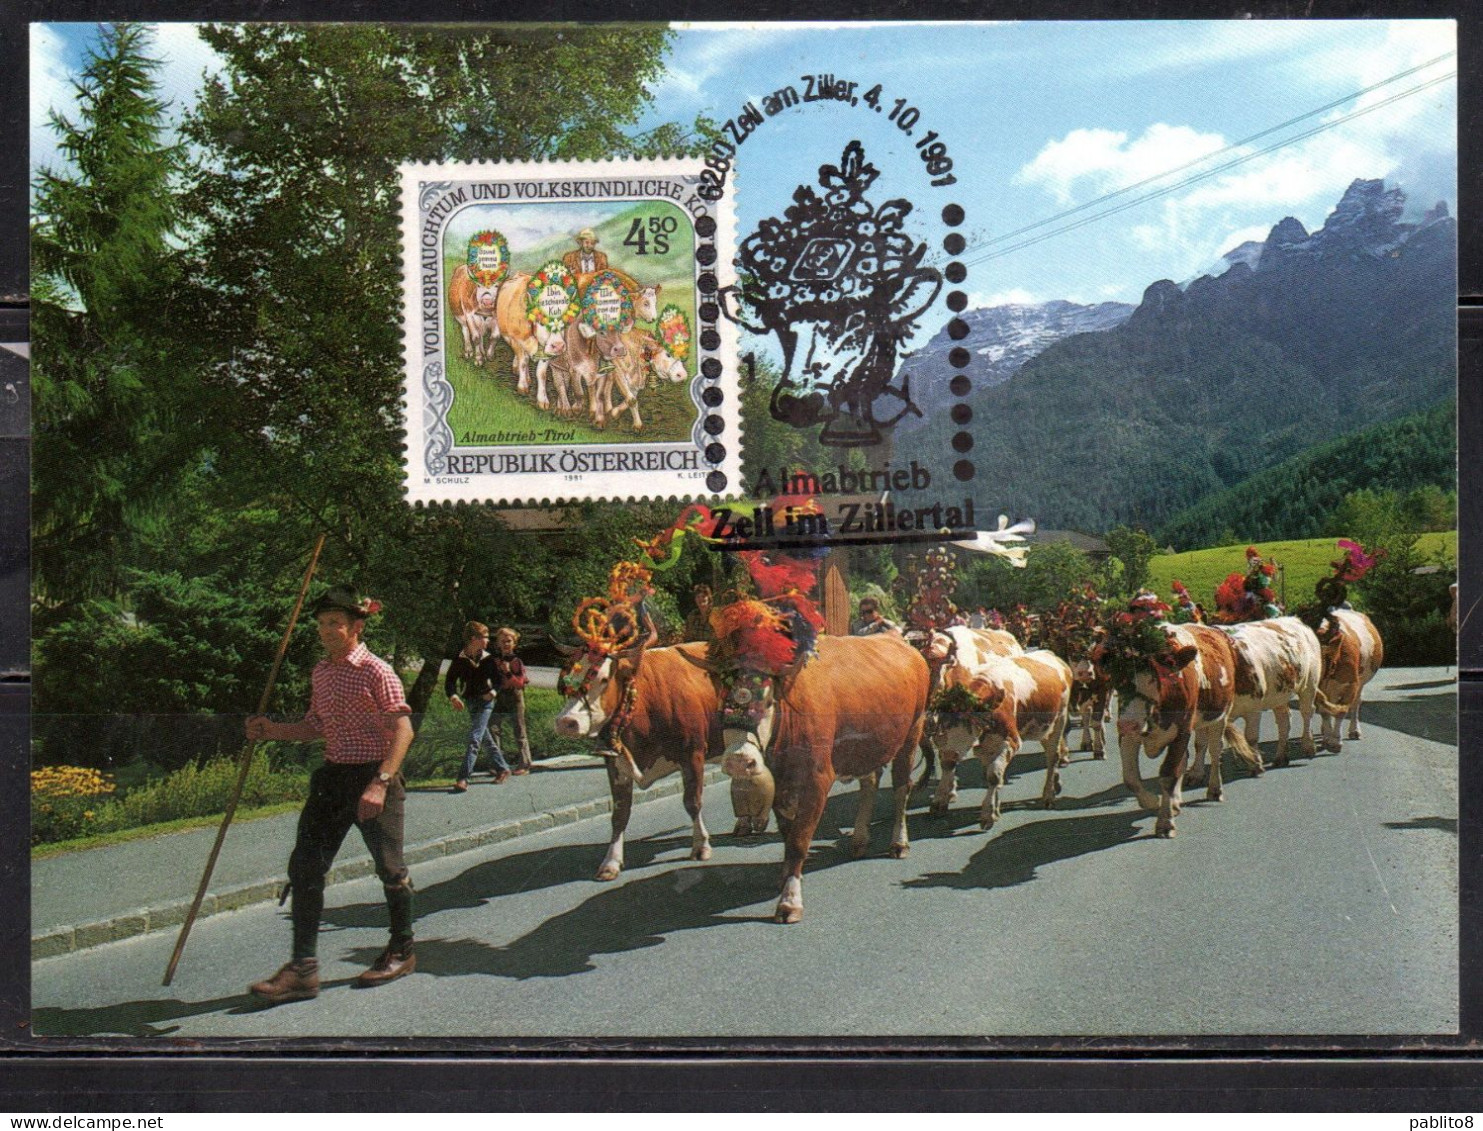 AUSTRIA ÖSTERREICH 1991 AUSTRIAN FOLK FESTIVAL ALMABTRIEB TYROL 4.50s CARTE MAXIMUM MAXI CARD - Cartes-Maximum (CM)